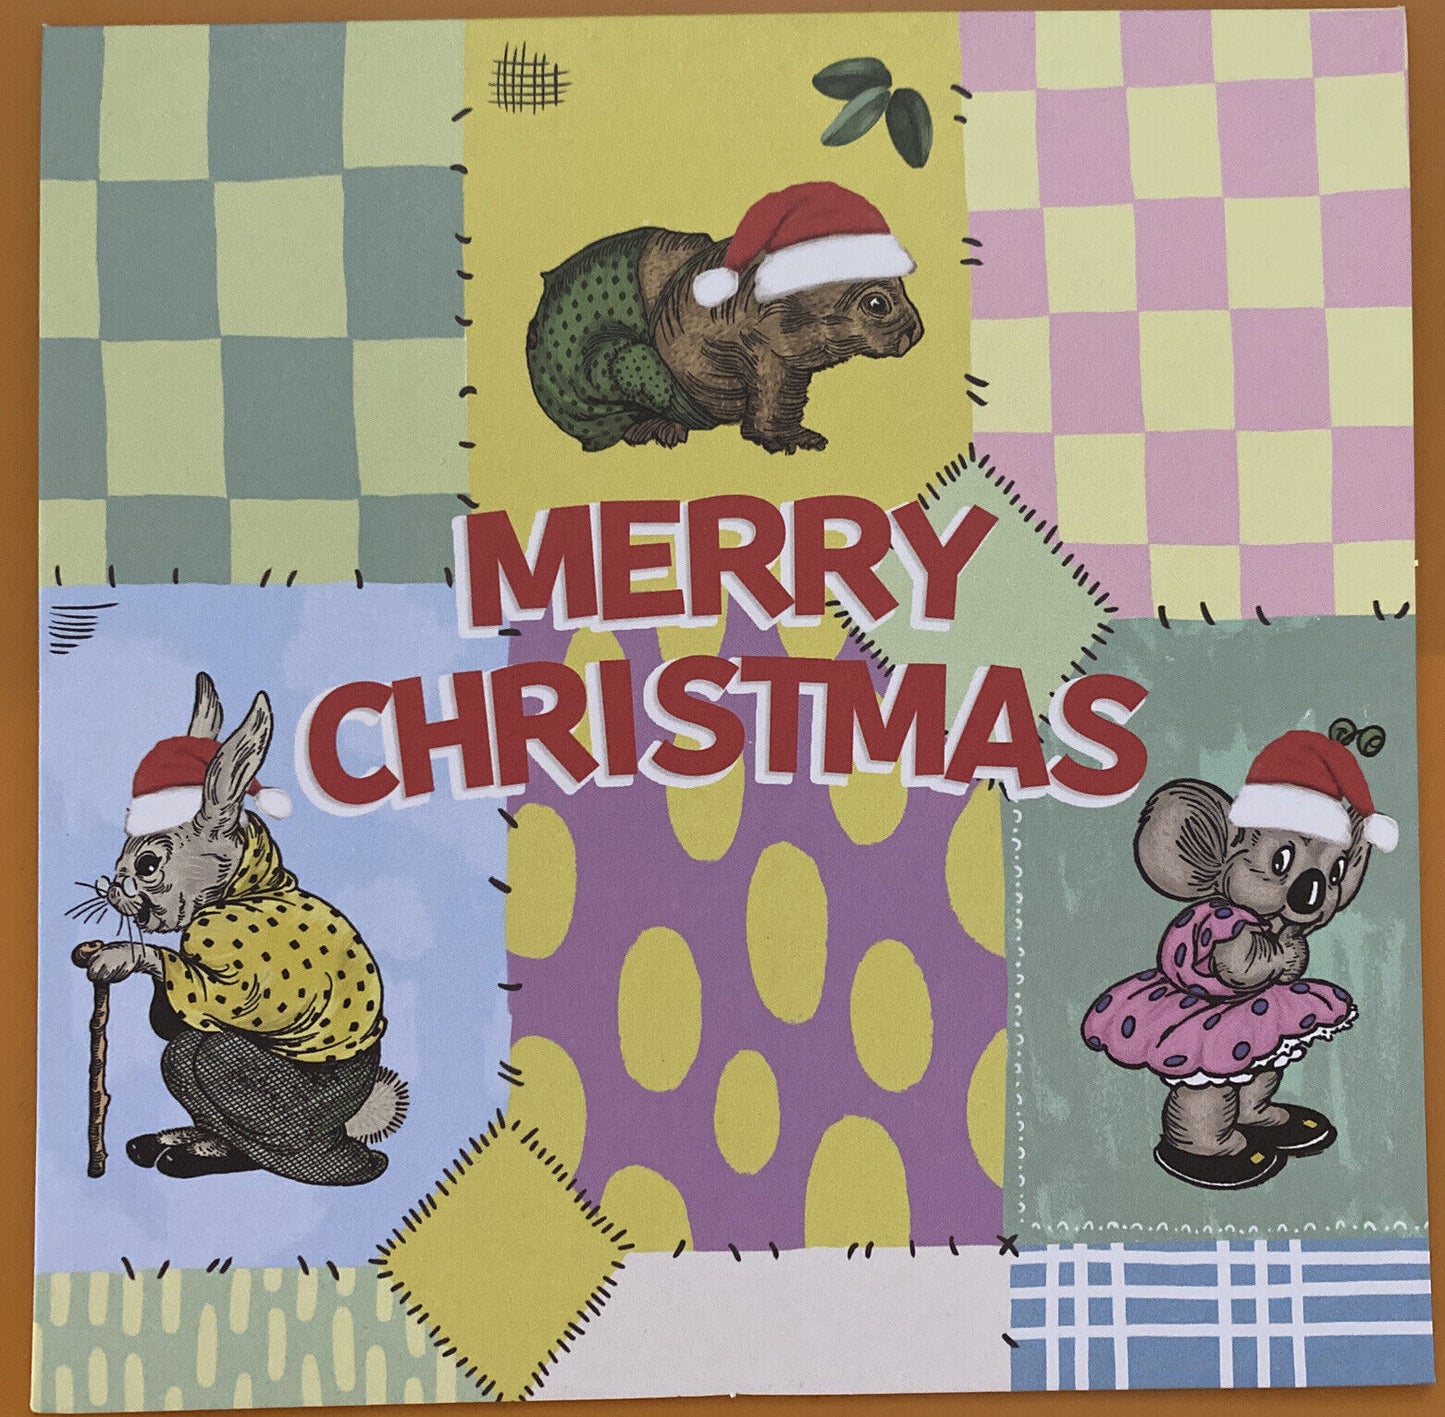 Blinky Bill Christmas Greeting Card - Australiana themed Bush Christmas